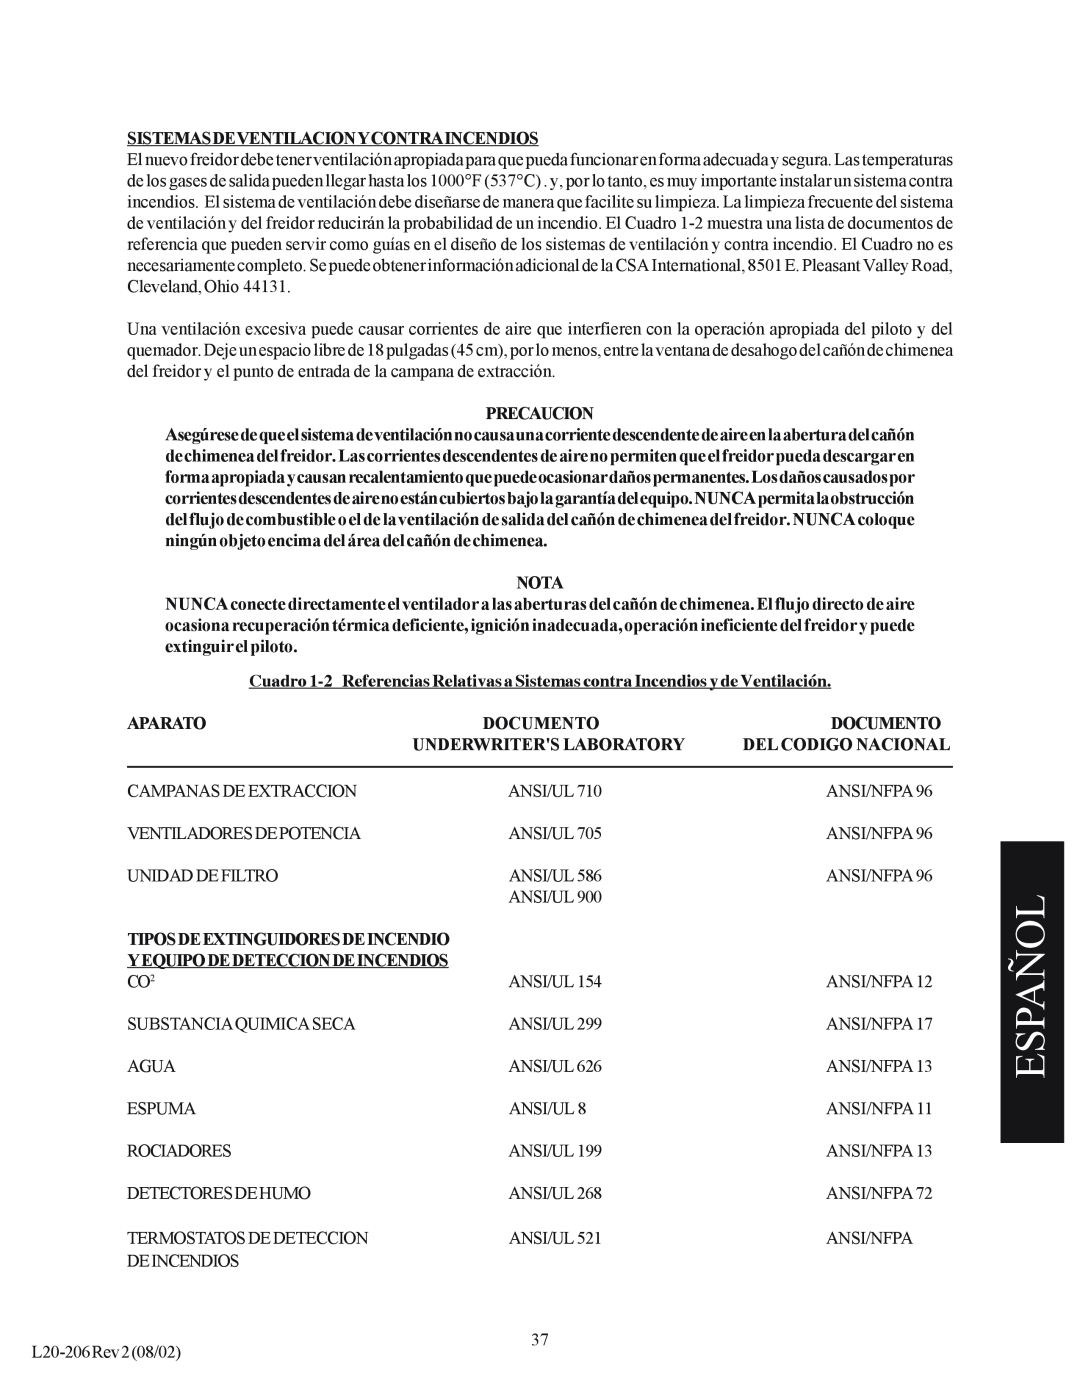 Pitco Frialator SG operation manual Español, Sistemasdeventilacionycontraincendios, Precaucion, Nota, Aparato, Documento 